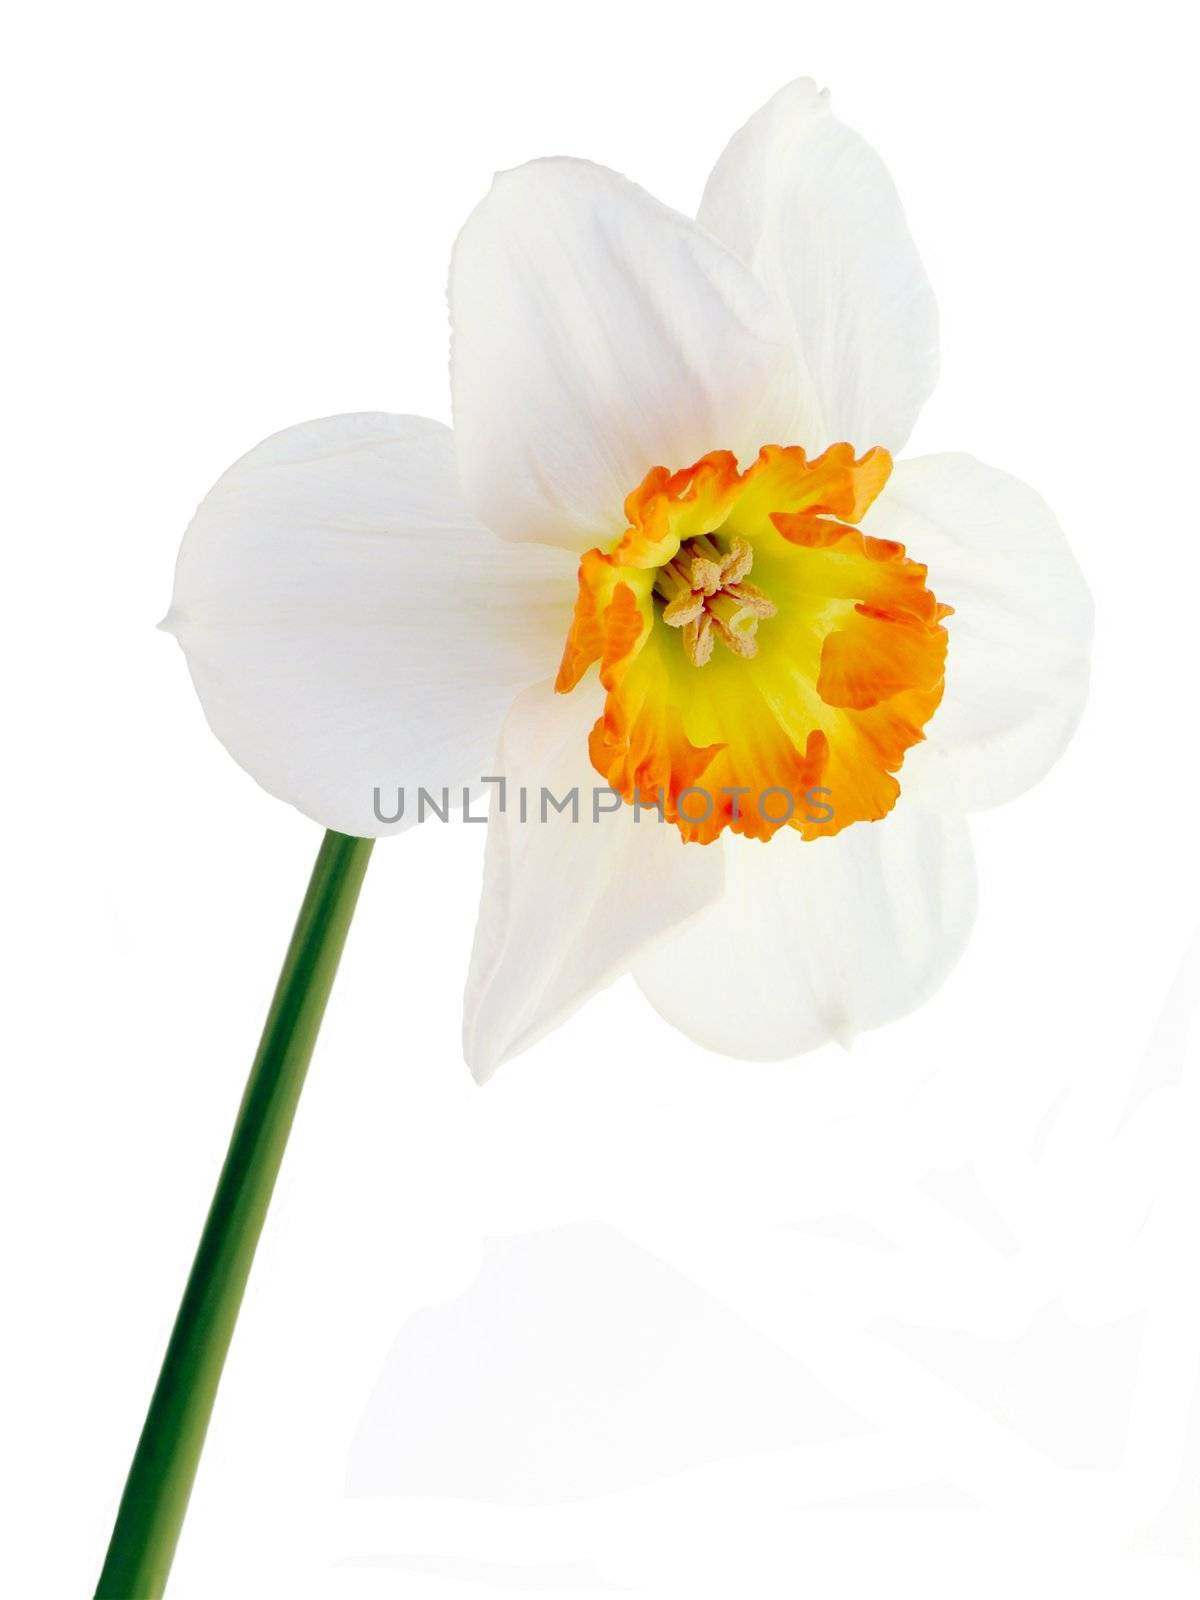 daffodils most beautiful symbols of spring